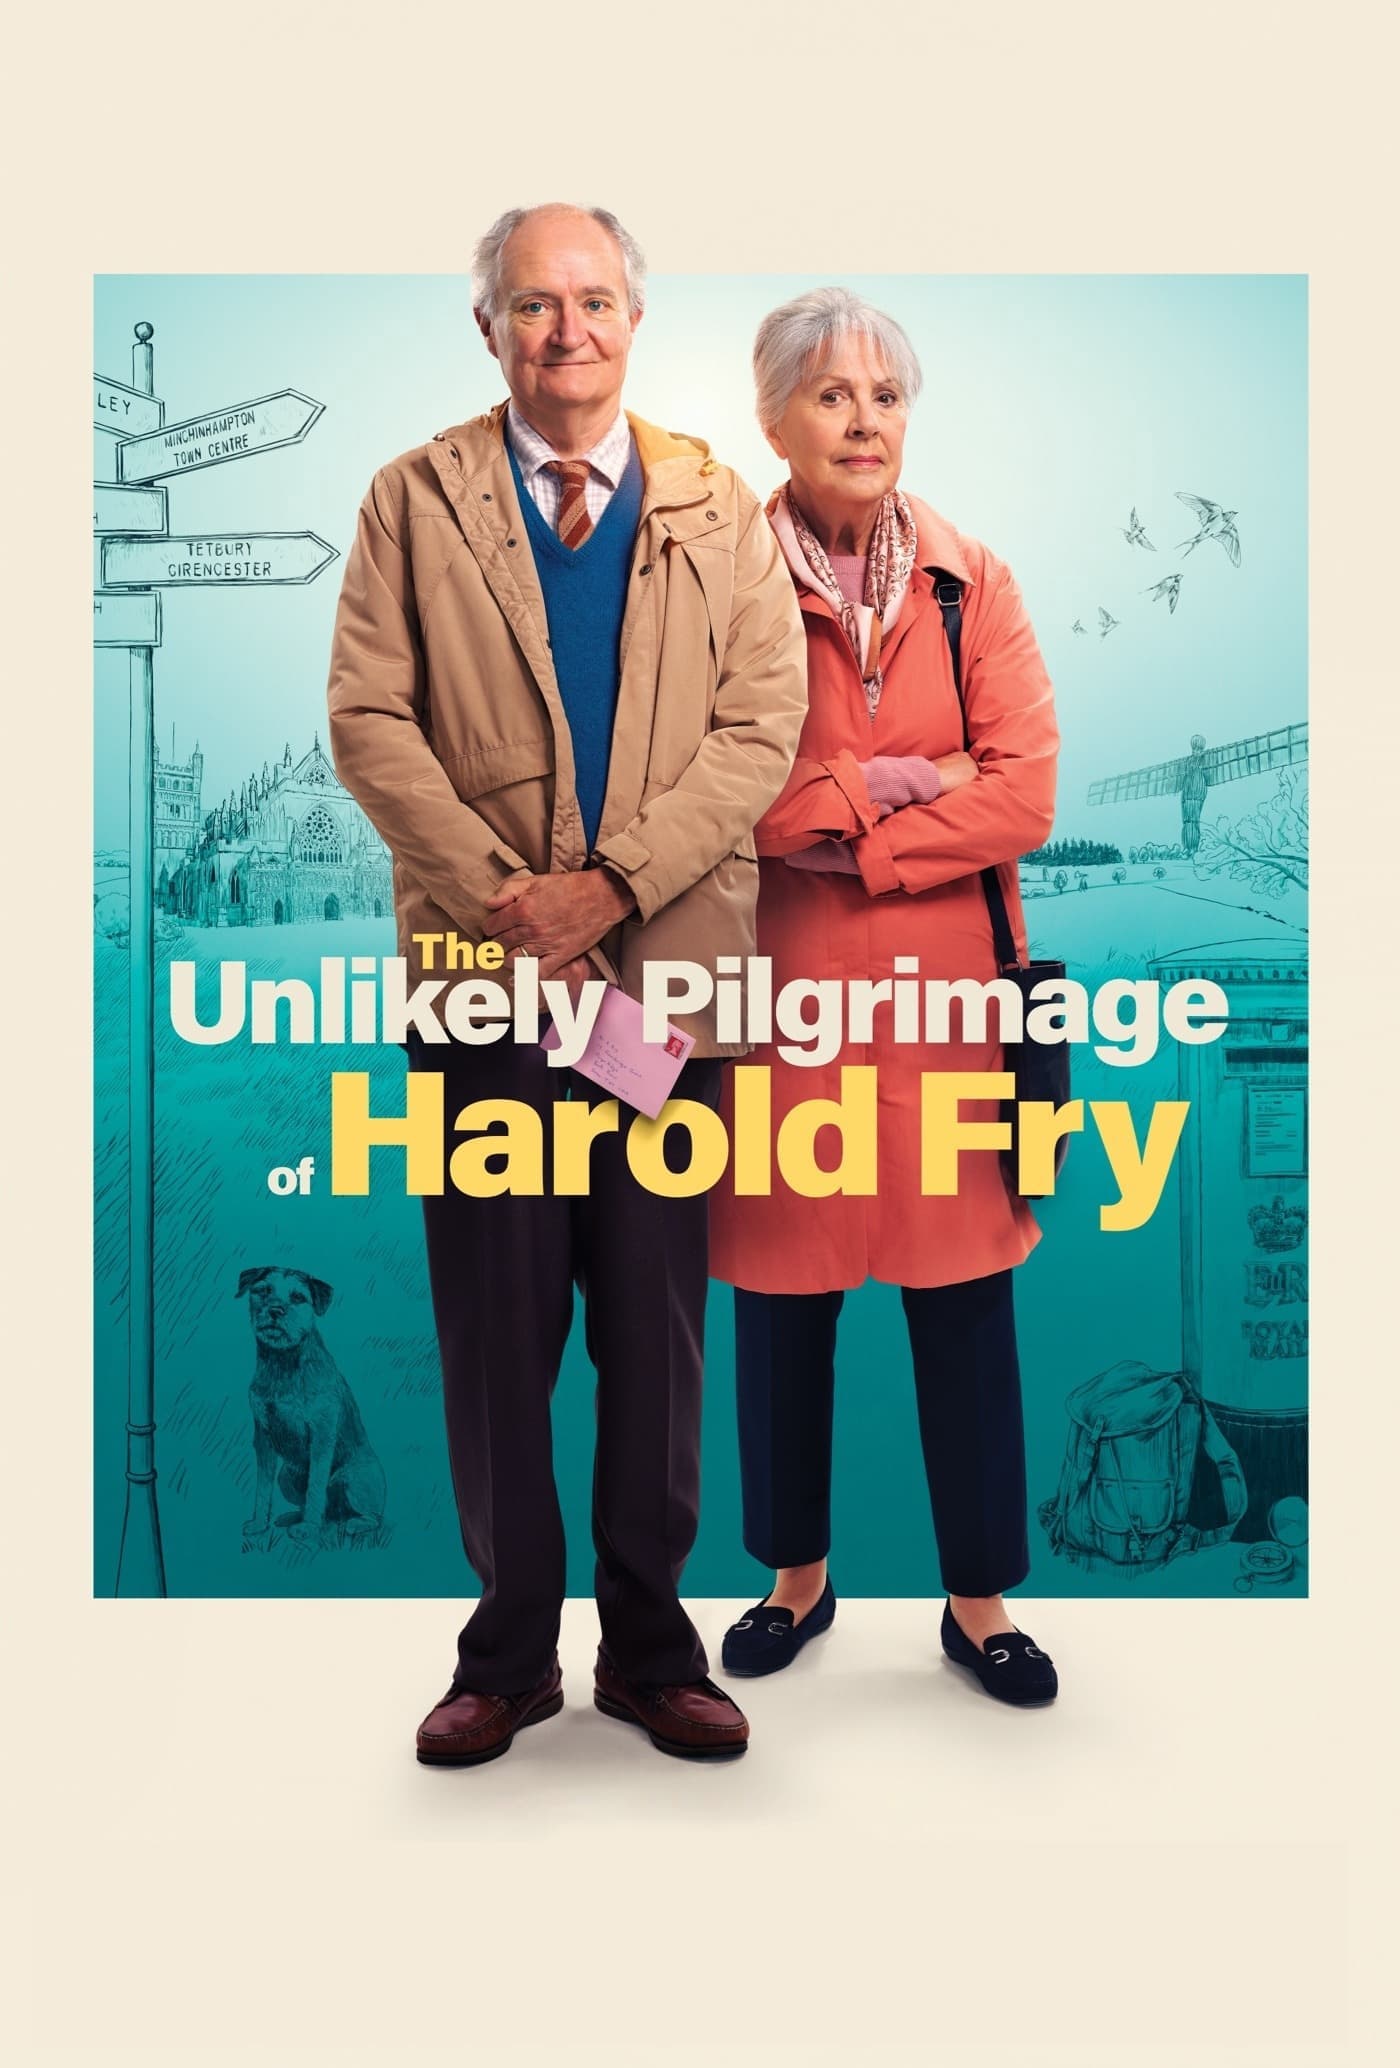 The Unlikely Pilgrimage of Harold Fry Film Analysis